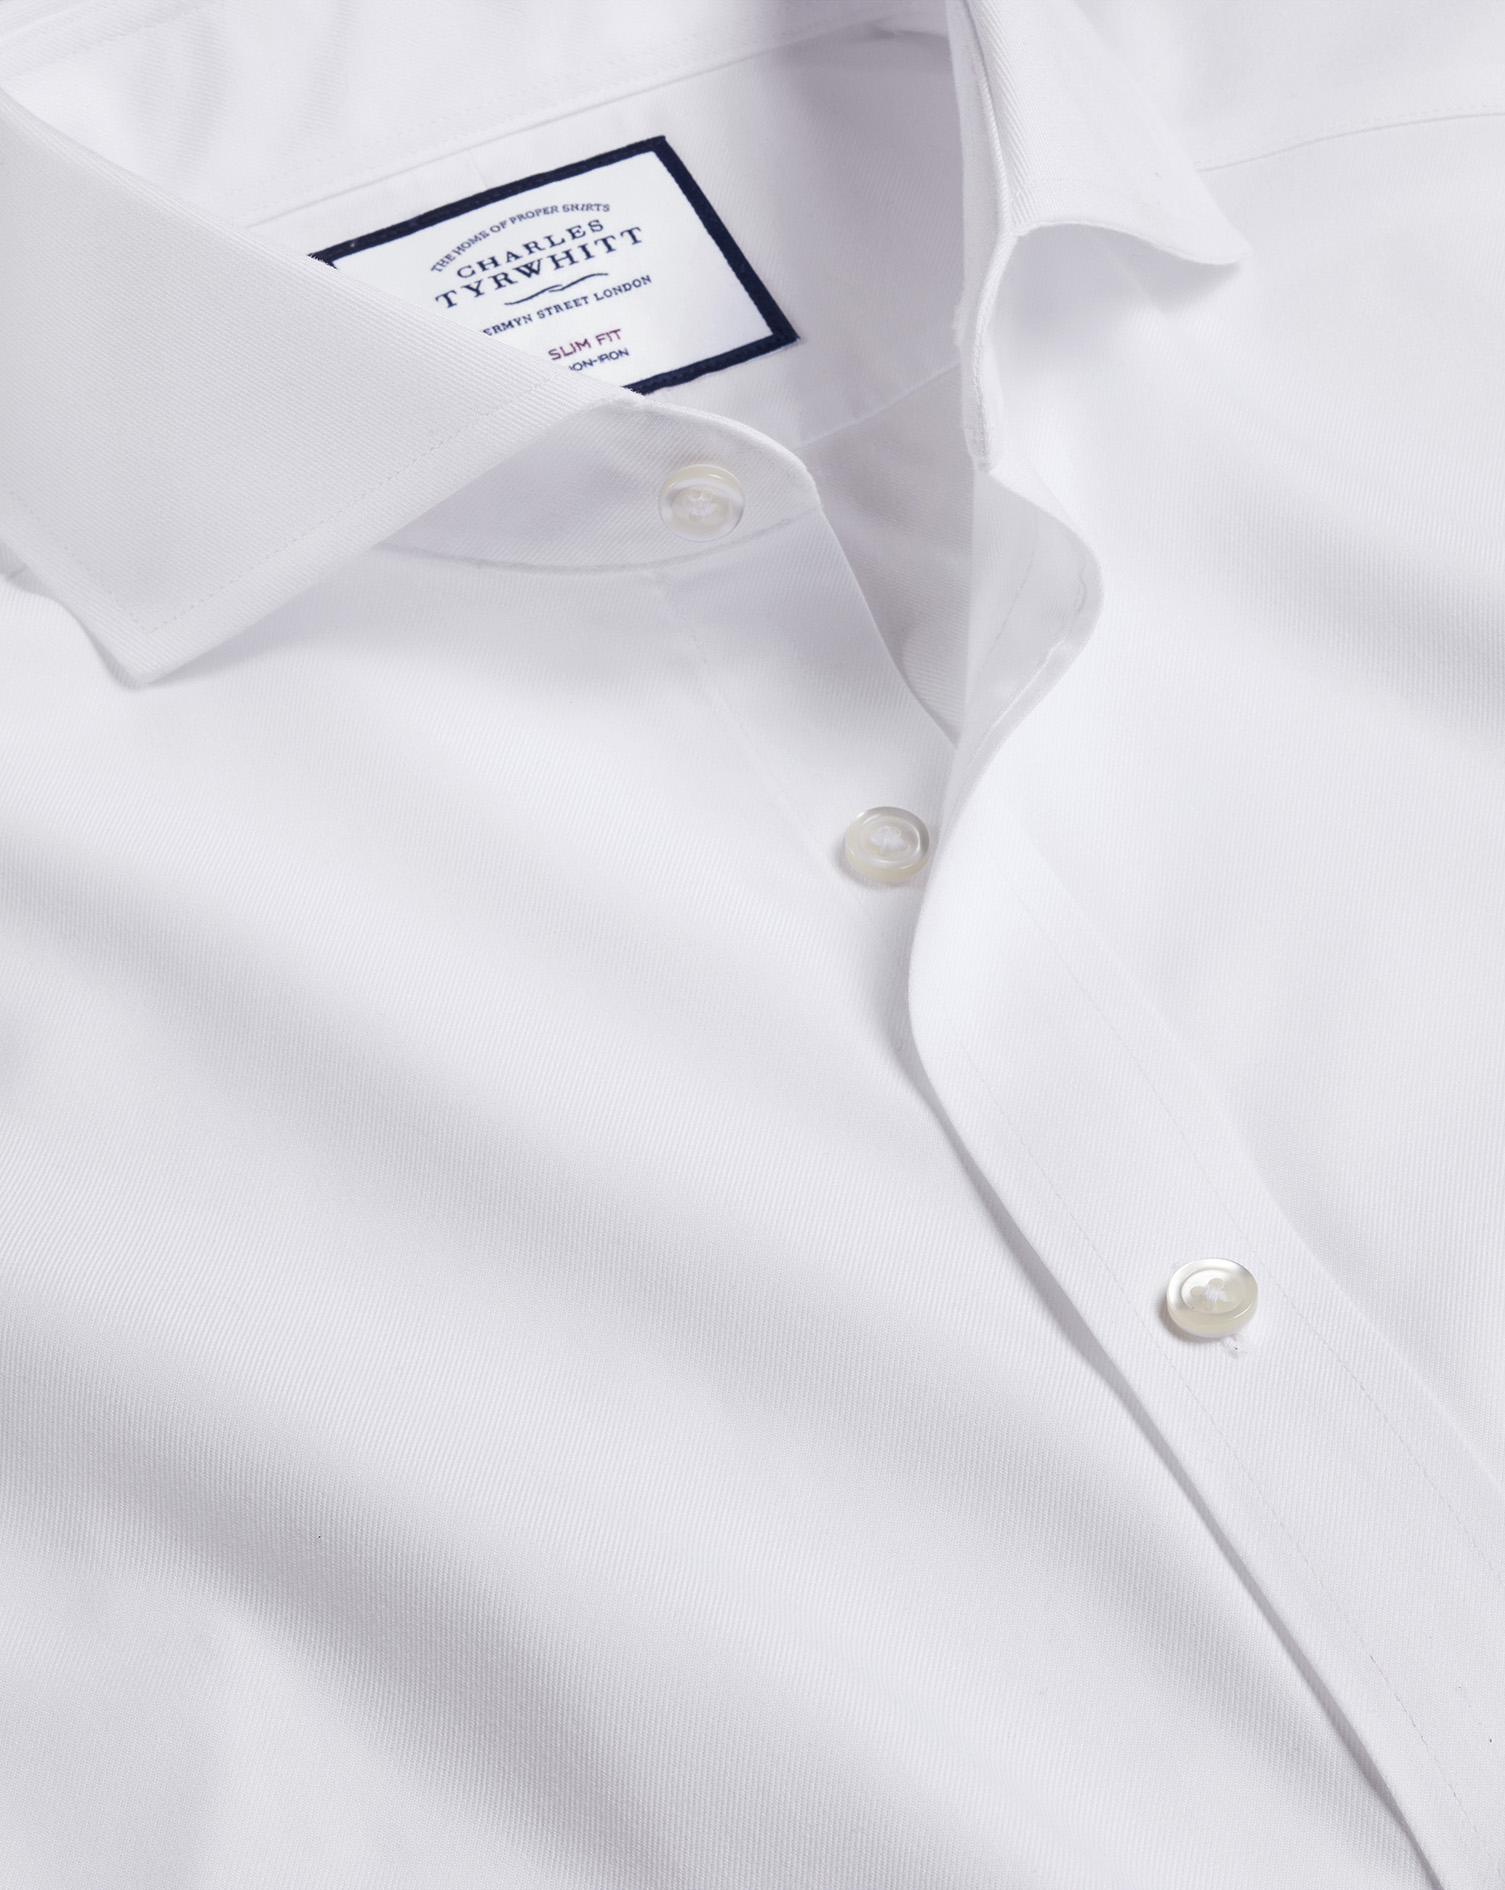 Men's Charles Tyrwhitt Extreme Cutaway Collar Non-Iron Twill Dress Shirt - White French Cuff Size La